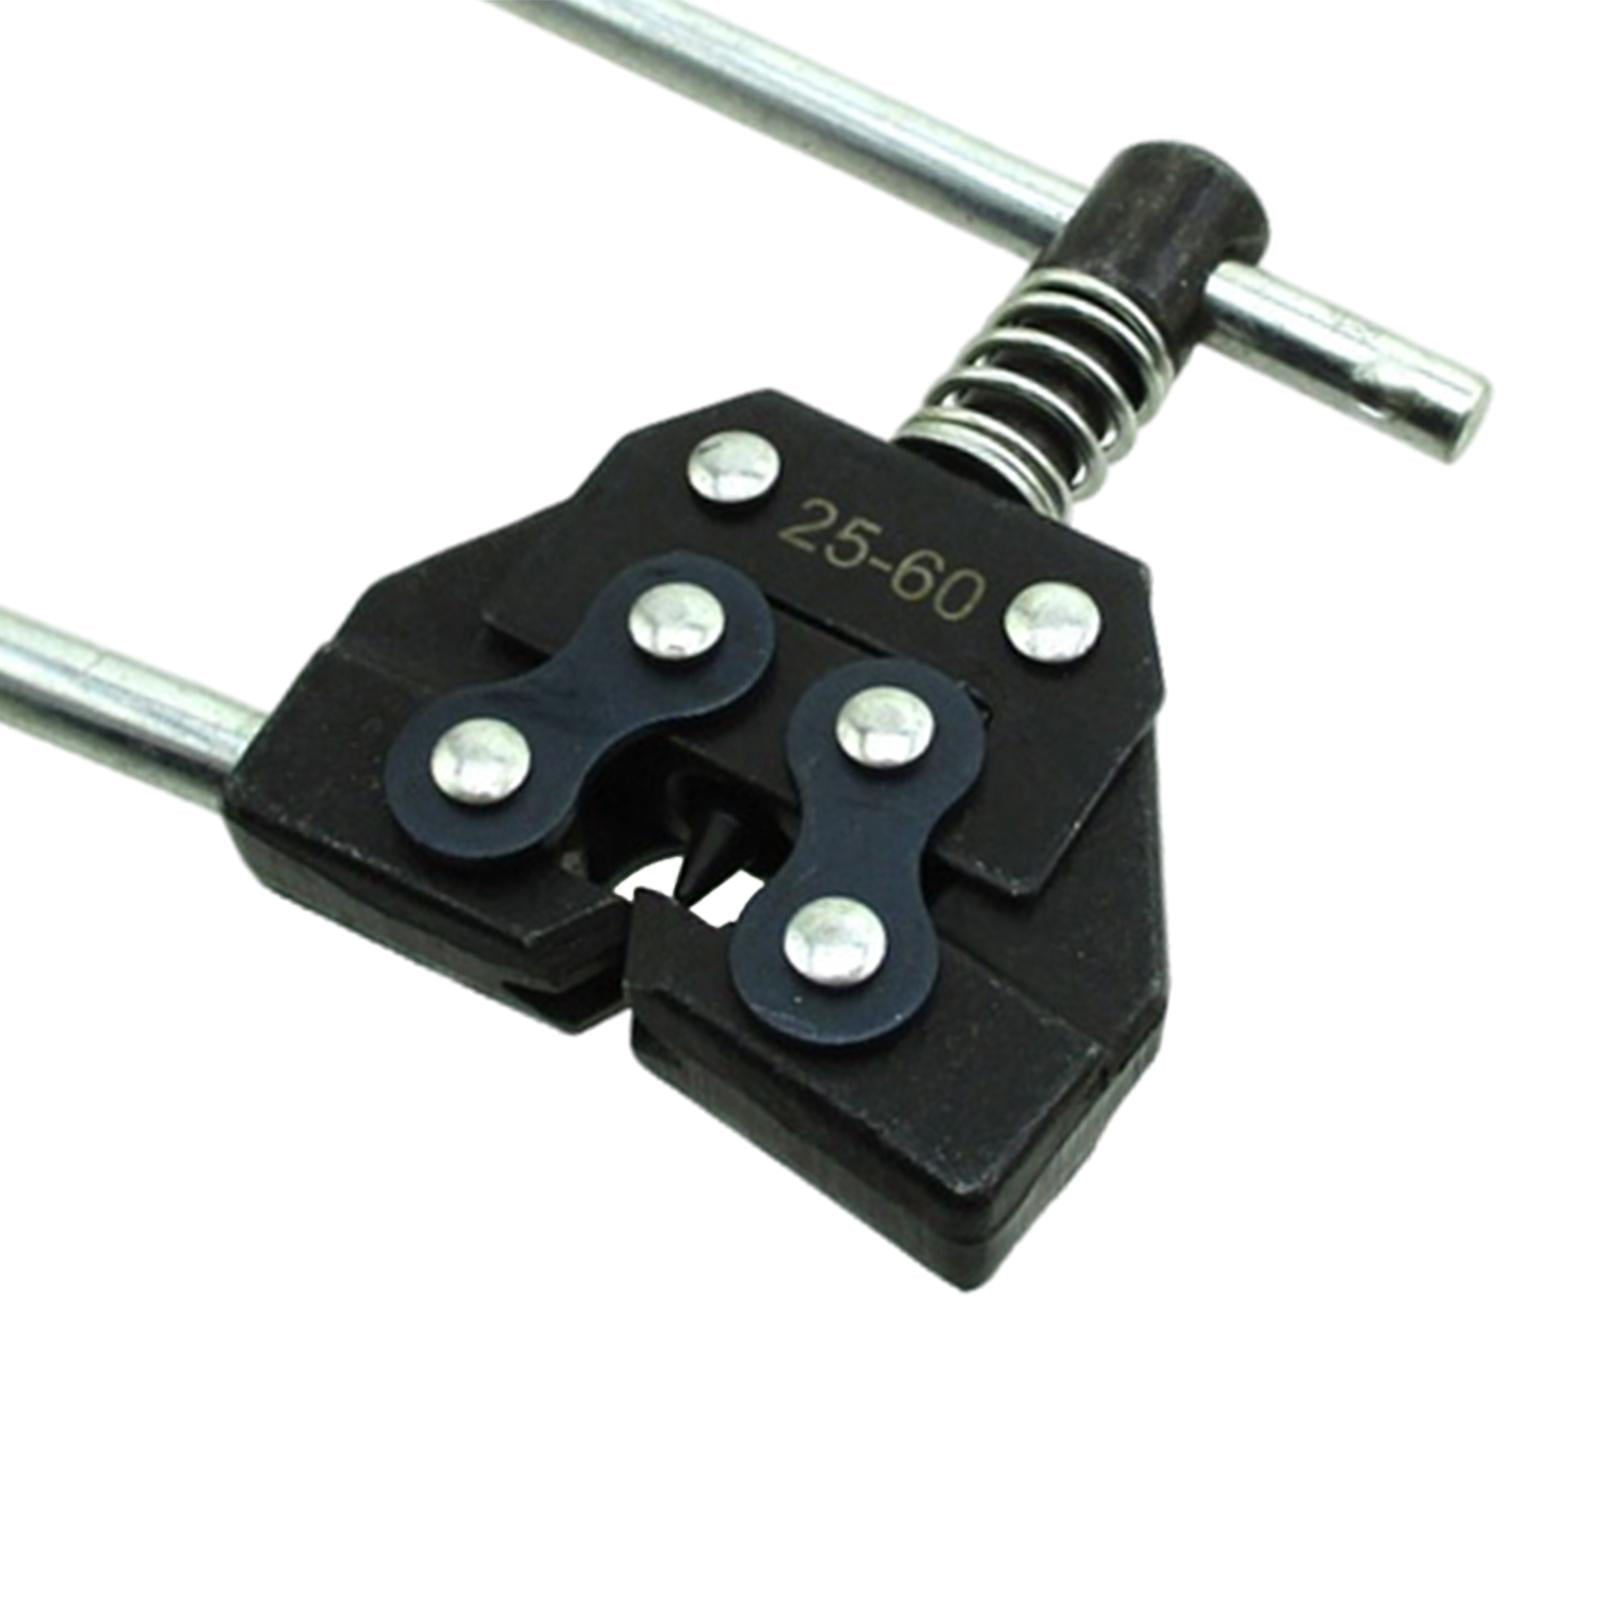 Roller Chain Detacher Breaker Cutter Tool Fit 415 420 428 520 530 Links Remover 